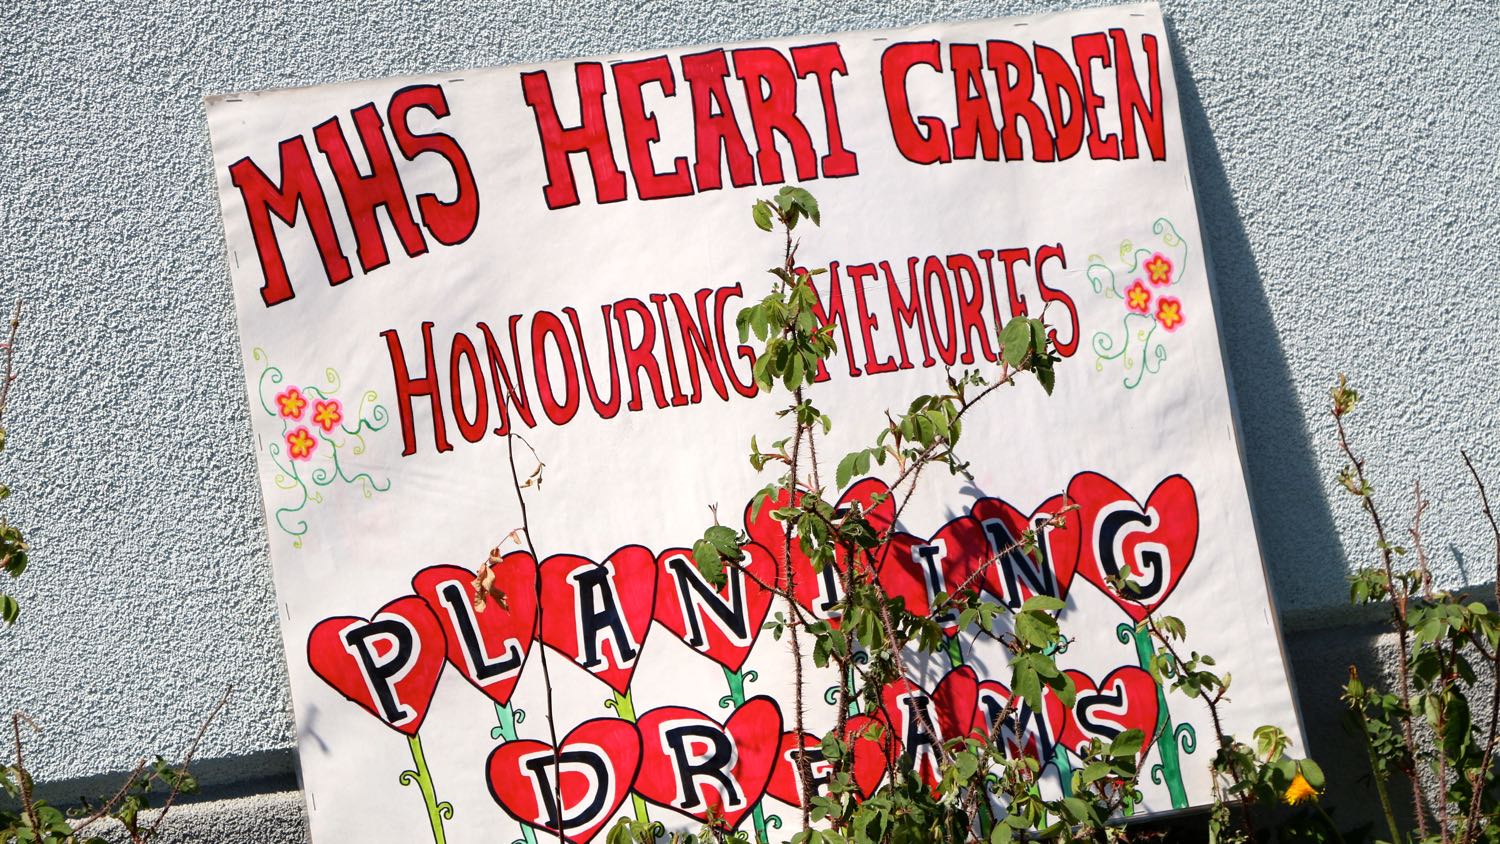 Heart Garden ceremony at Mildred Hall School